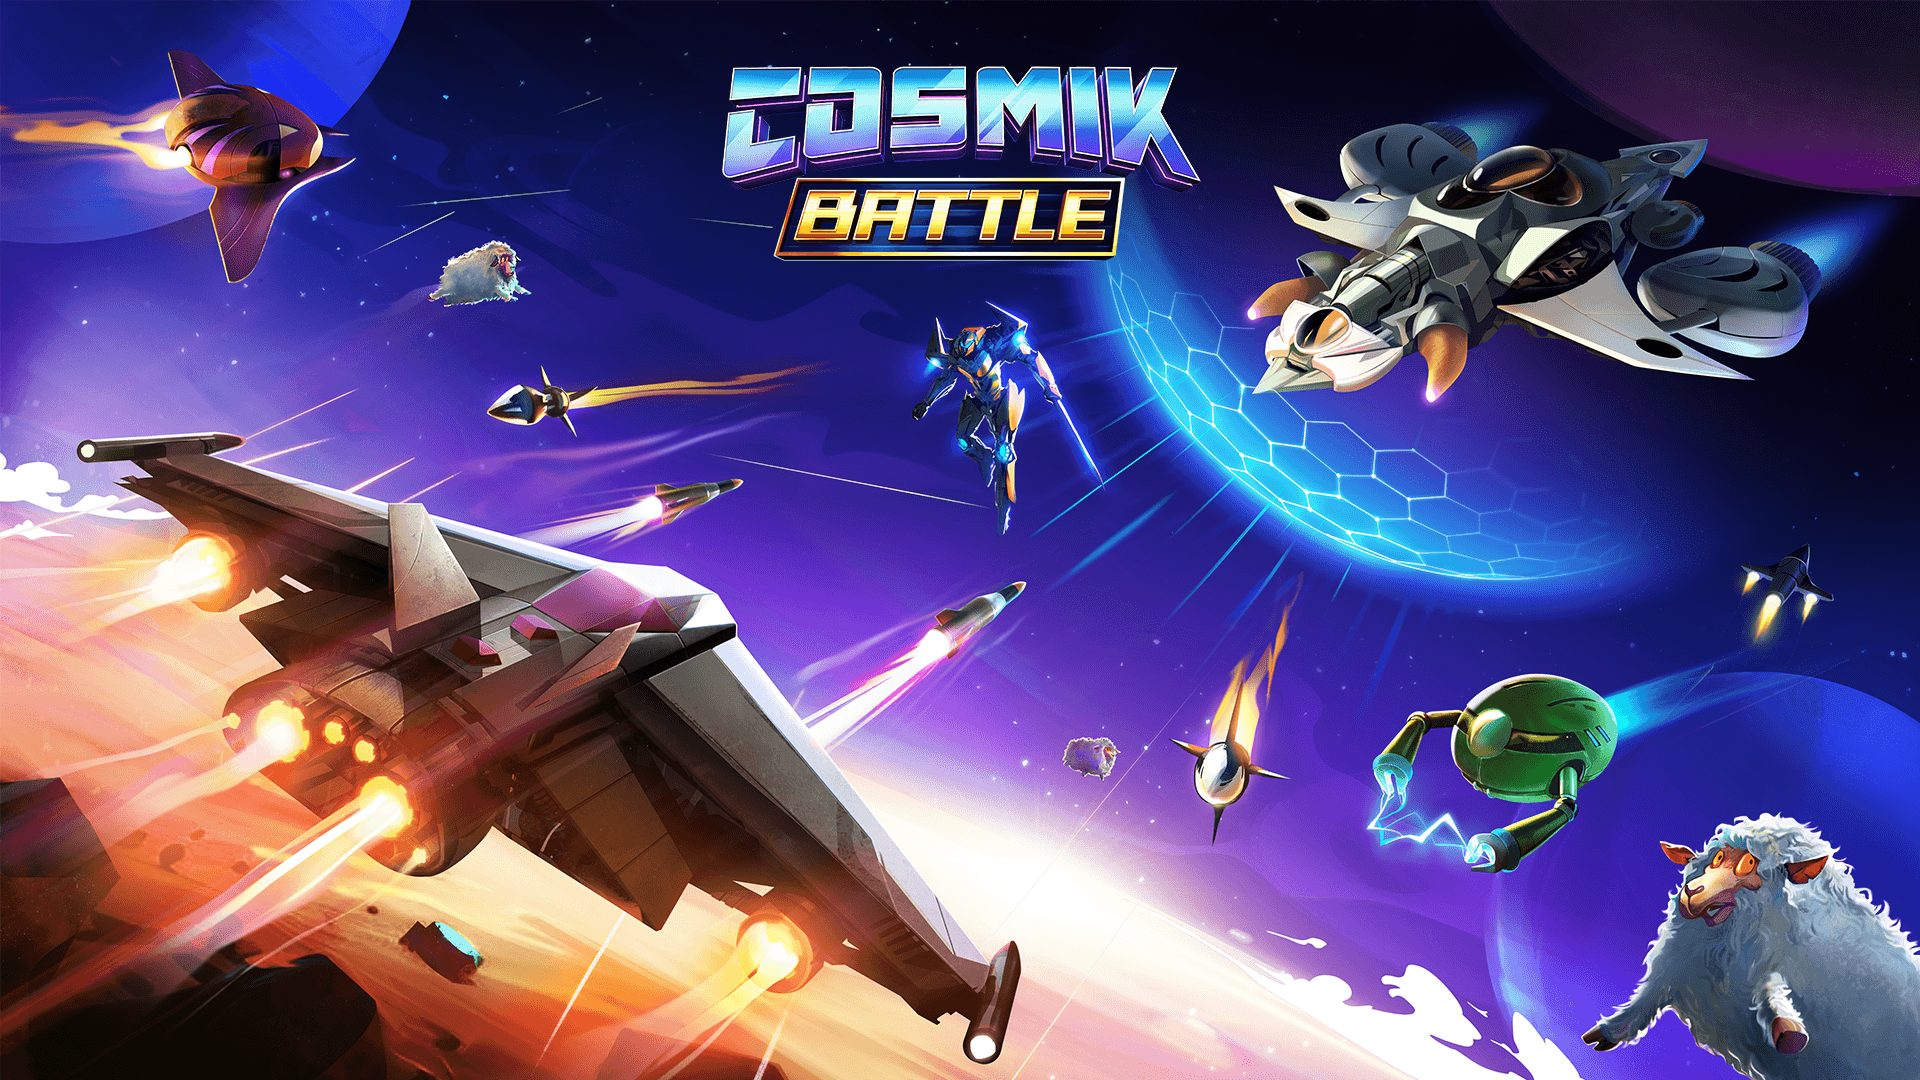 Cosmik Battle game image 1.png